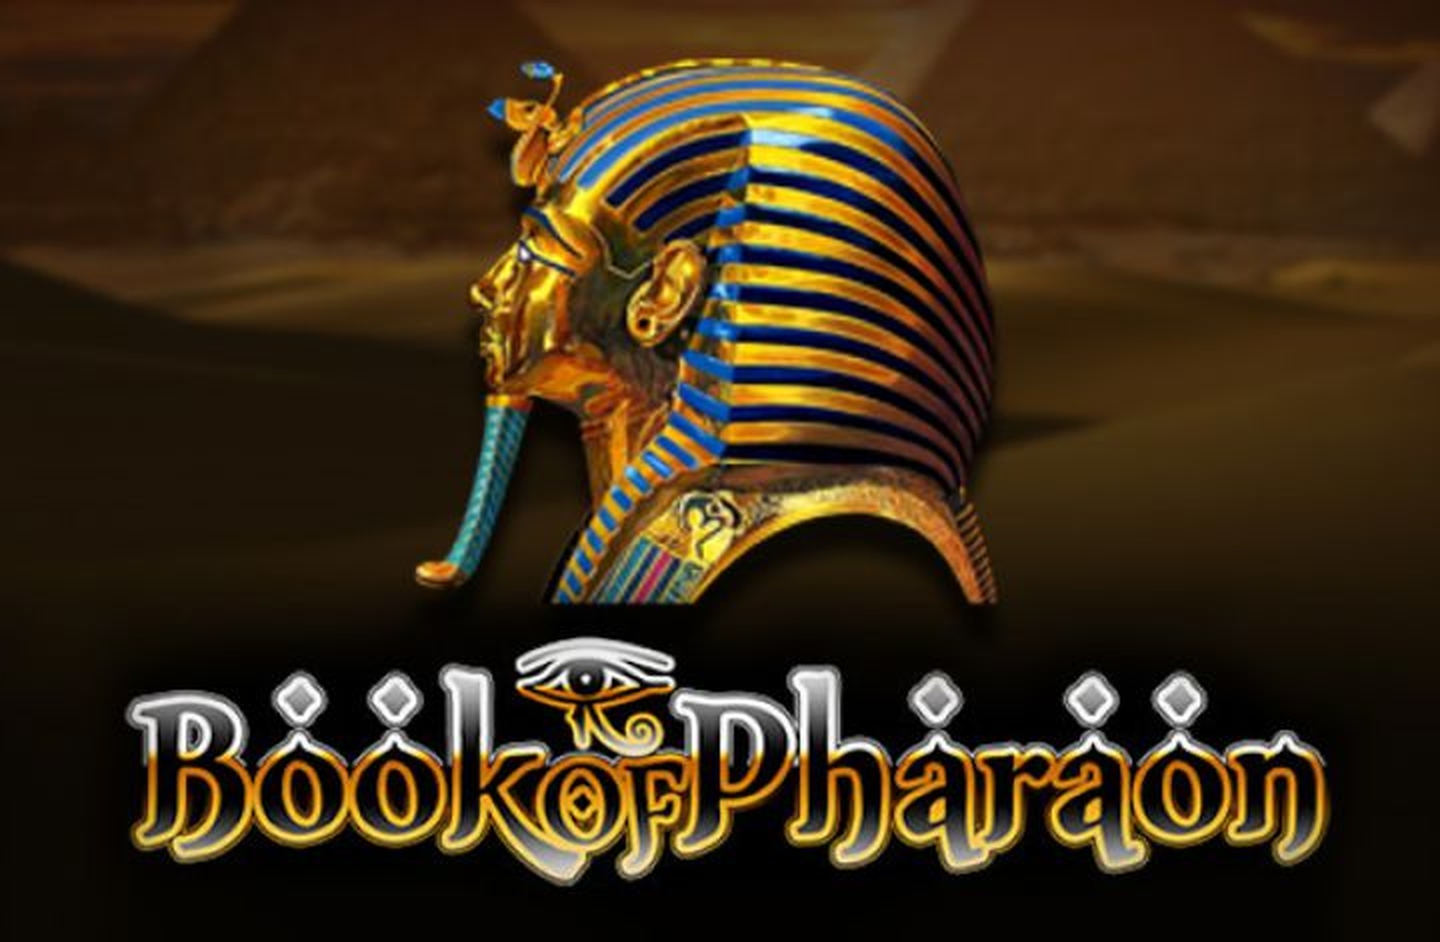 Book of Pharaon HD demo